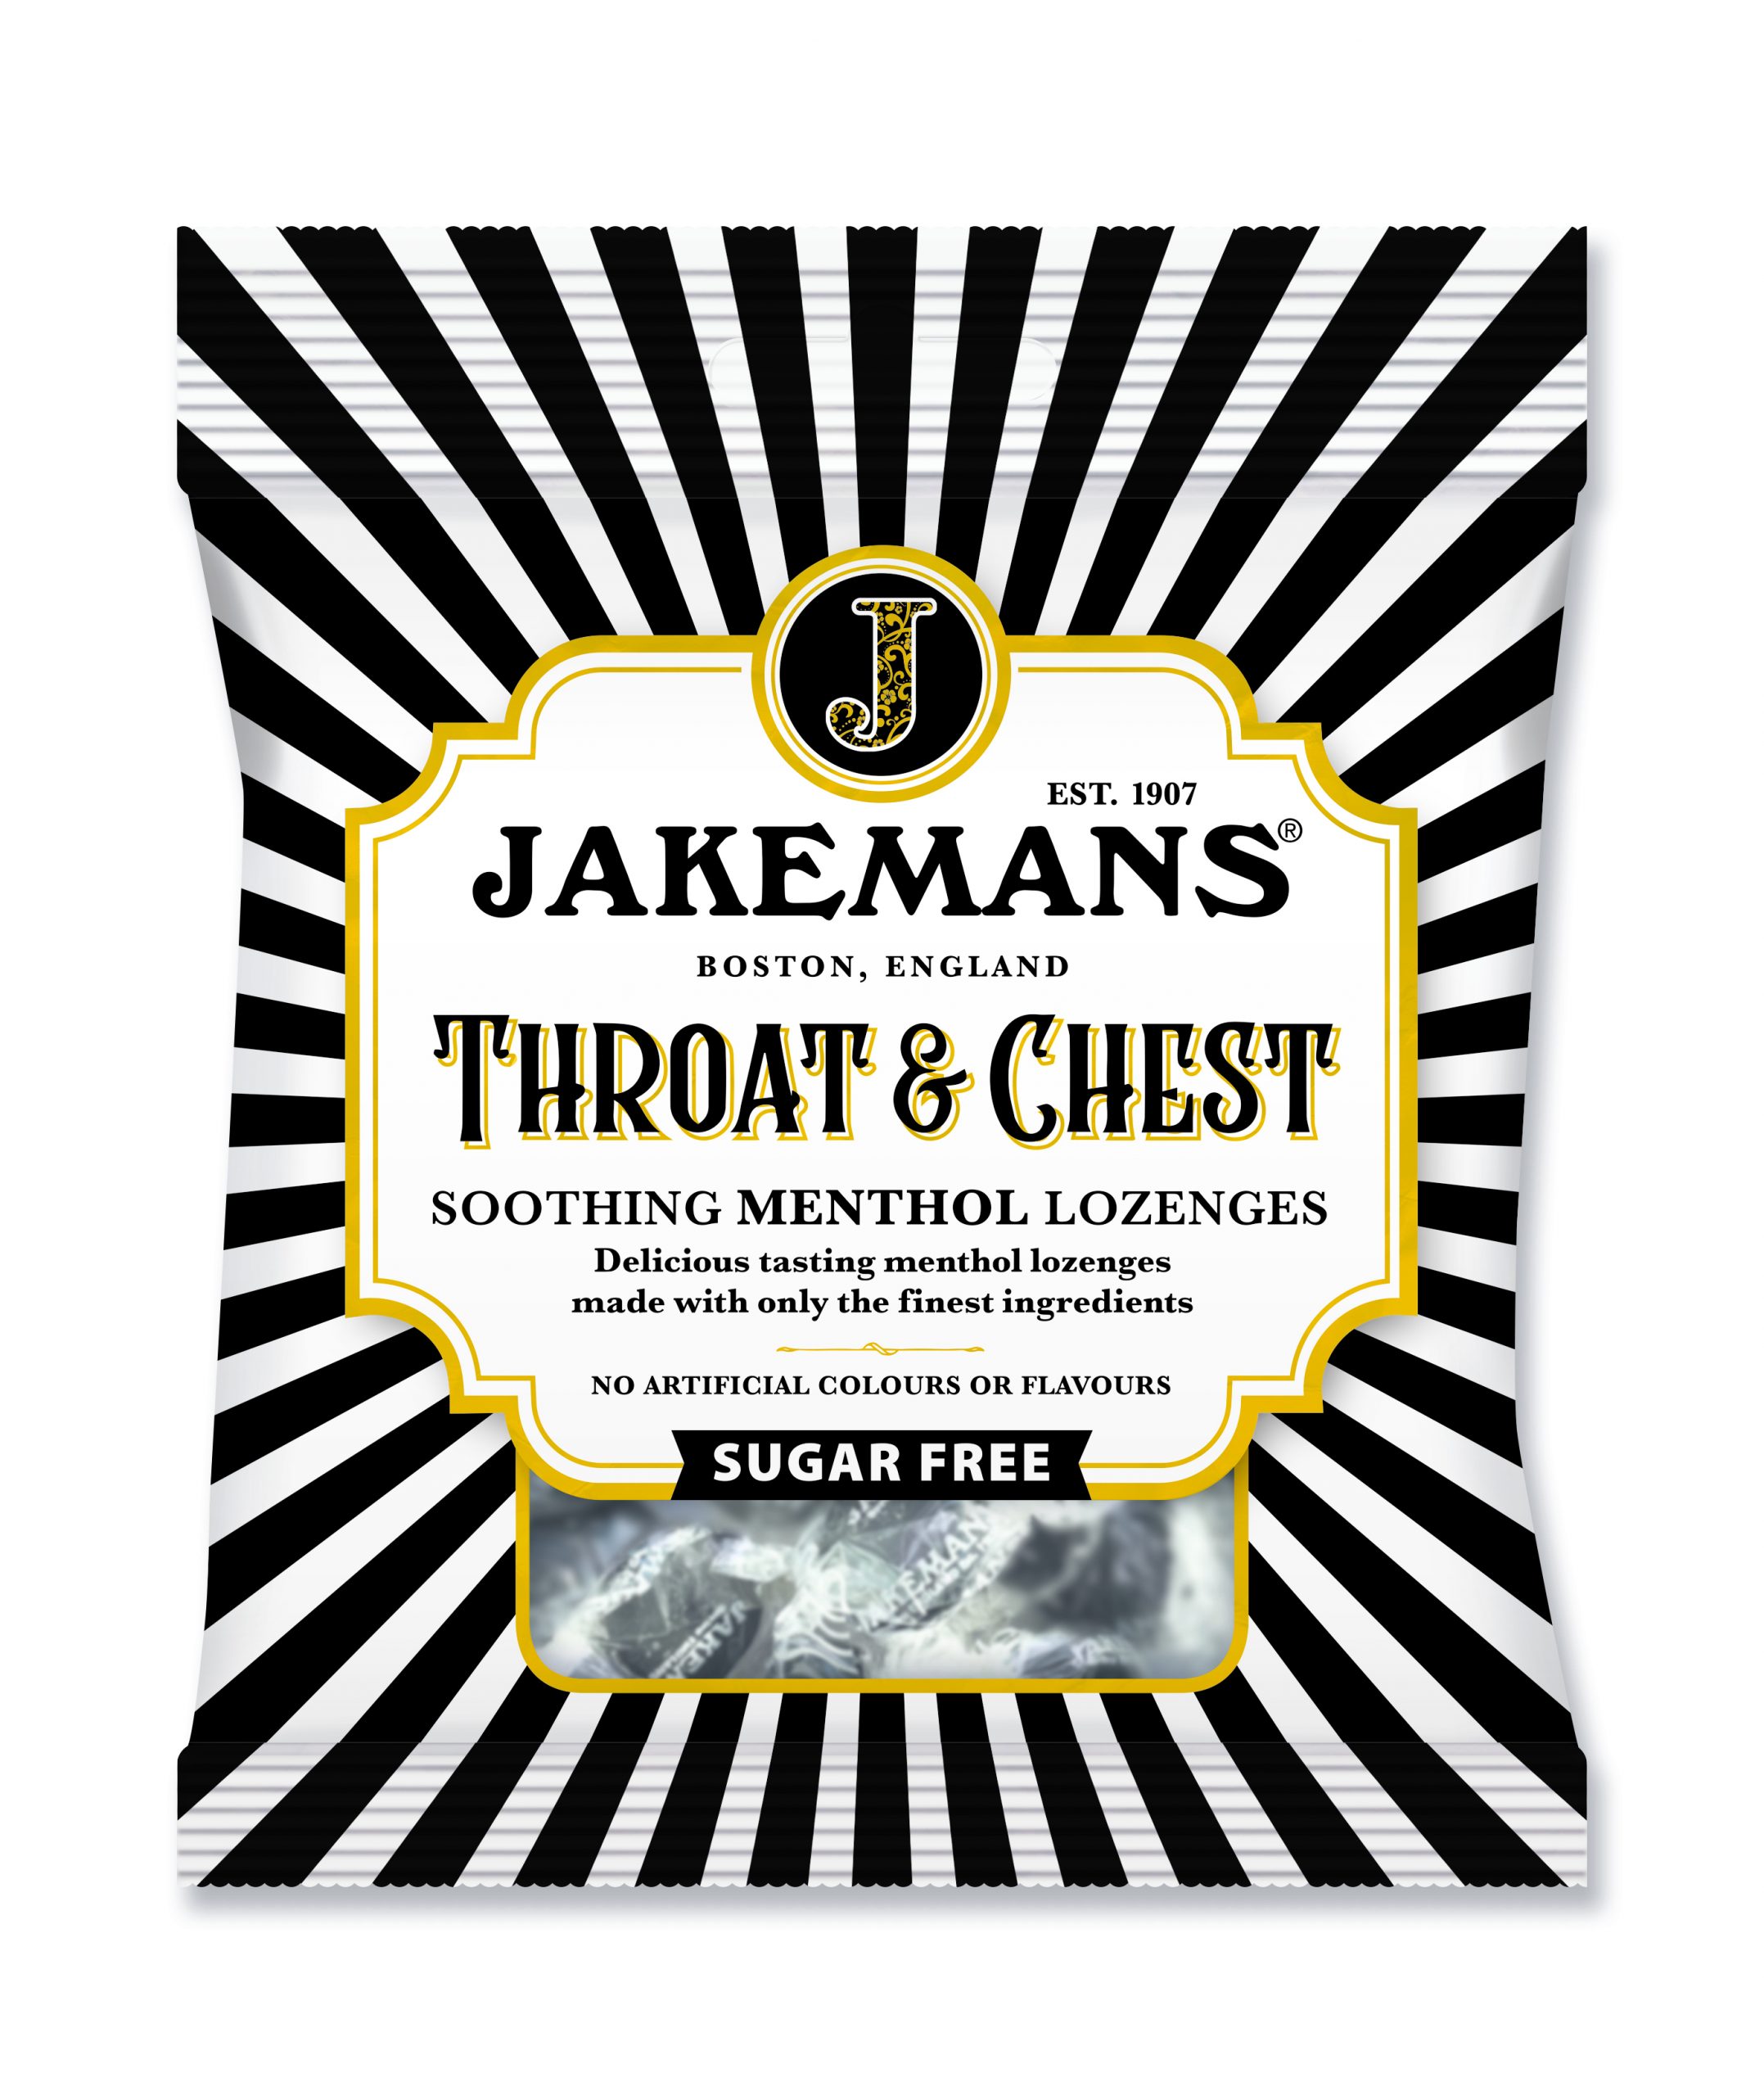 Jakemans’ new sugar-free lozenge packs a punch